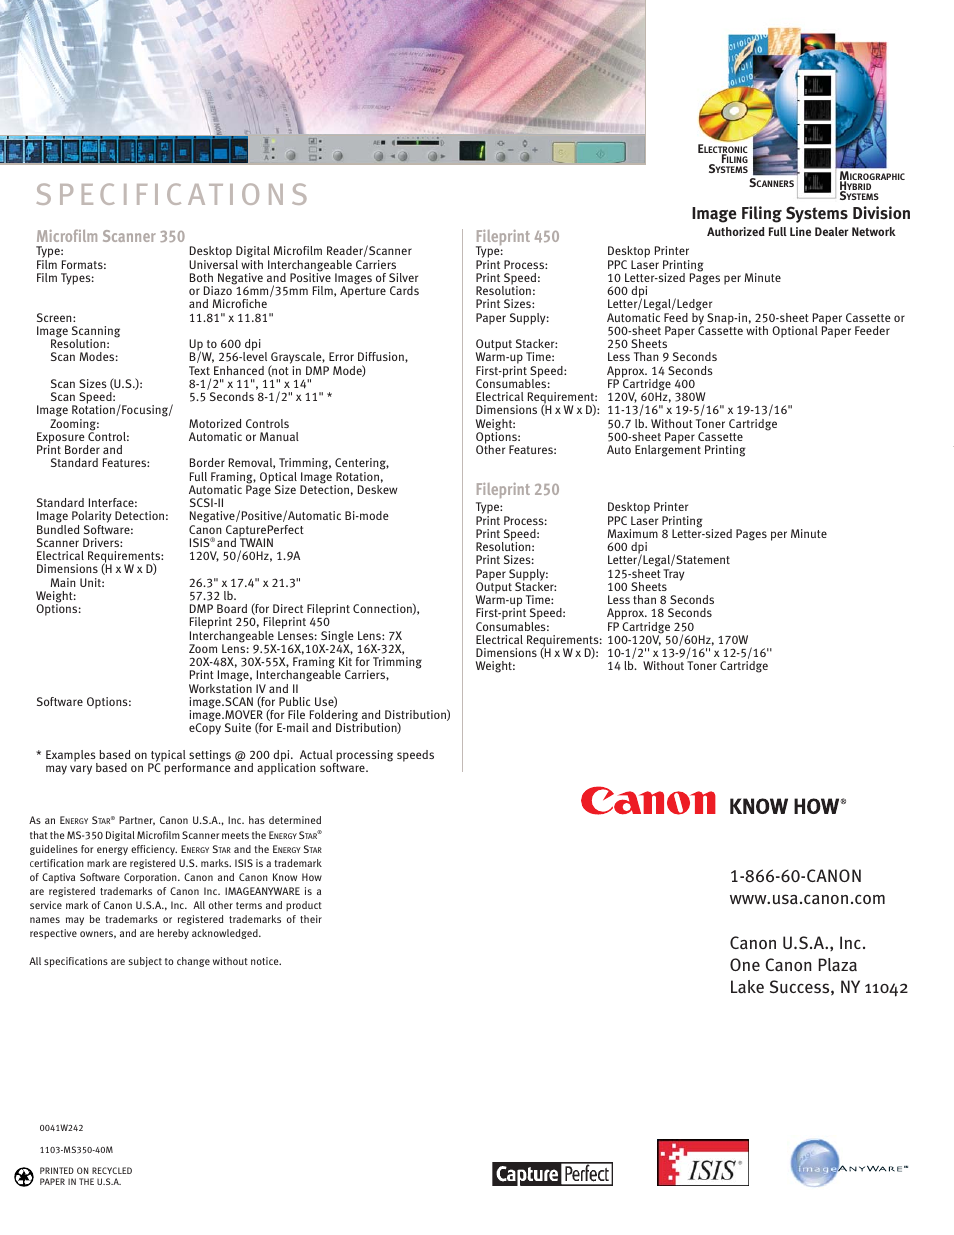 Microfilm scanner 350, Fileprint 450, Fileprint 250 | Canon MS-350 User  Manual | Page 4 / 4 | Original mode